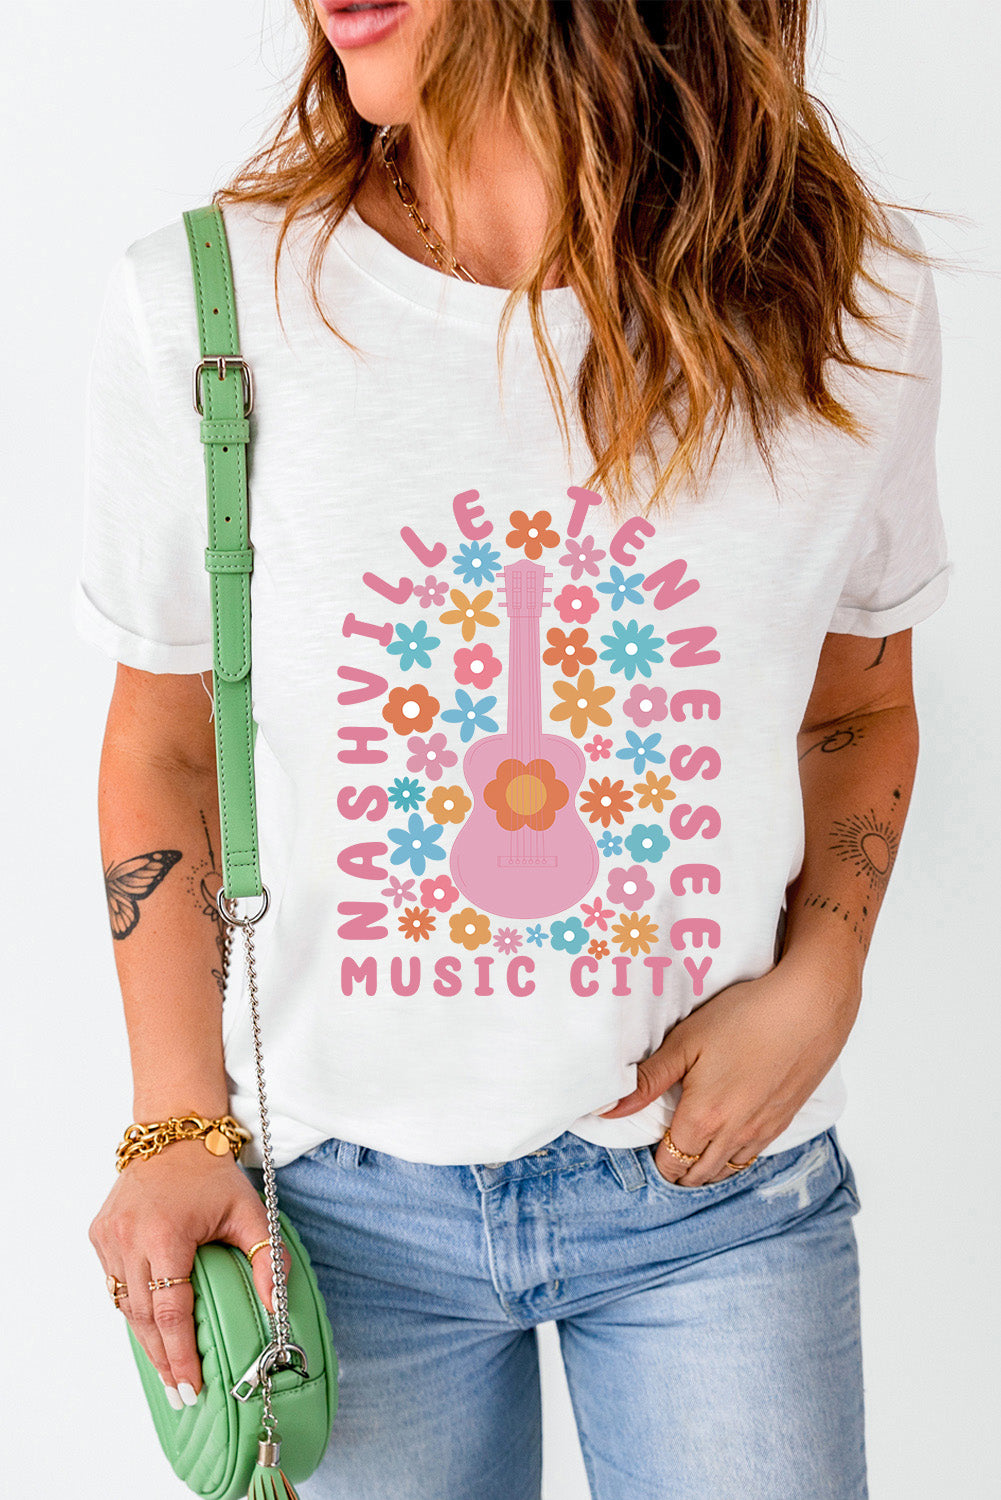 Nashville Music City Retro Flower Graphic Round Neck Short Sleeve T-Shirt